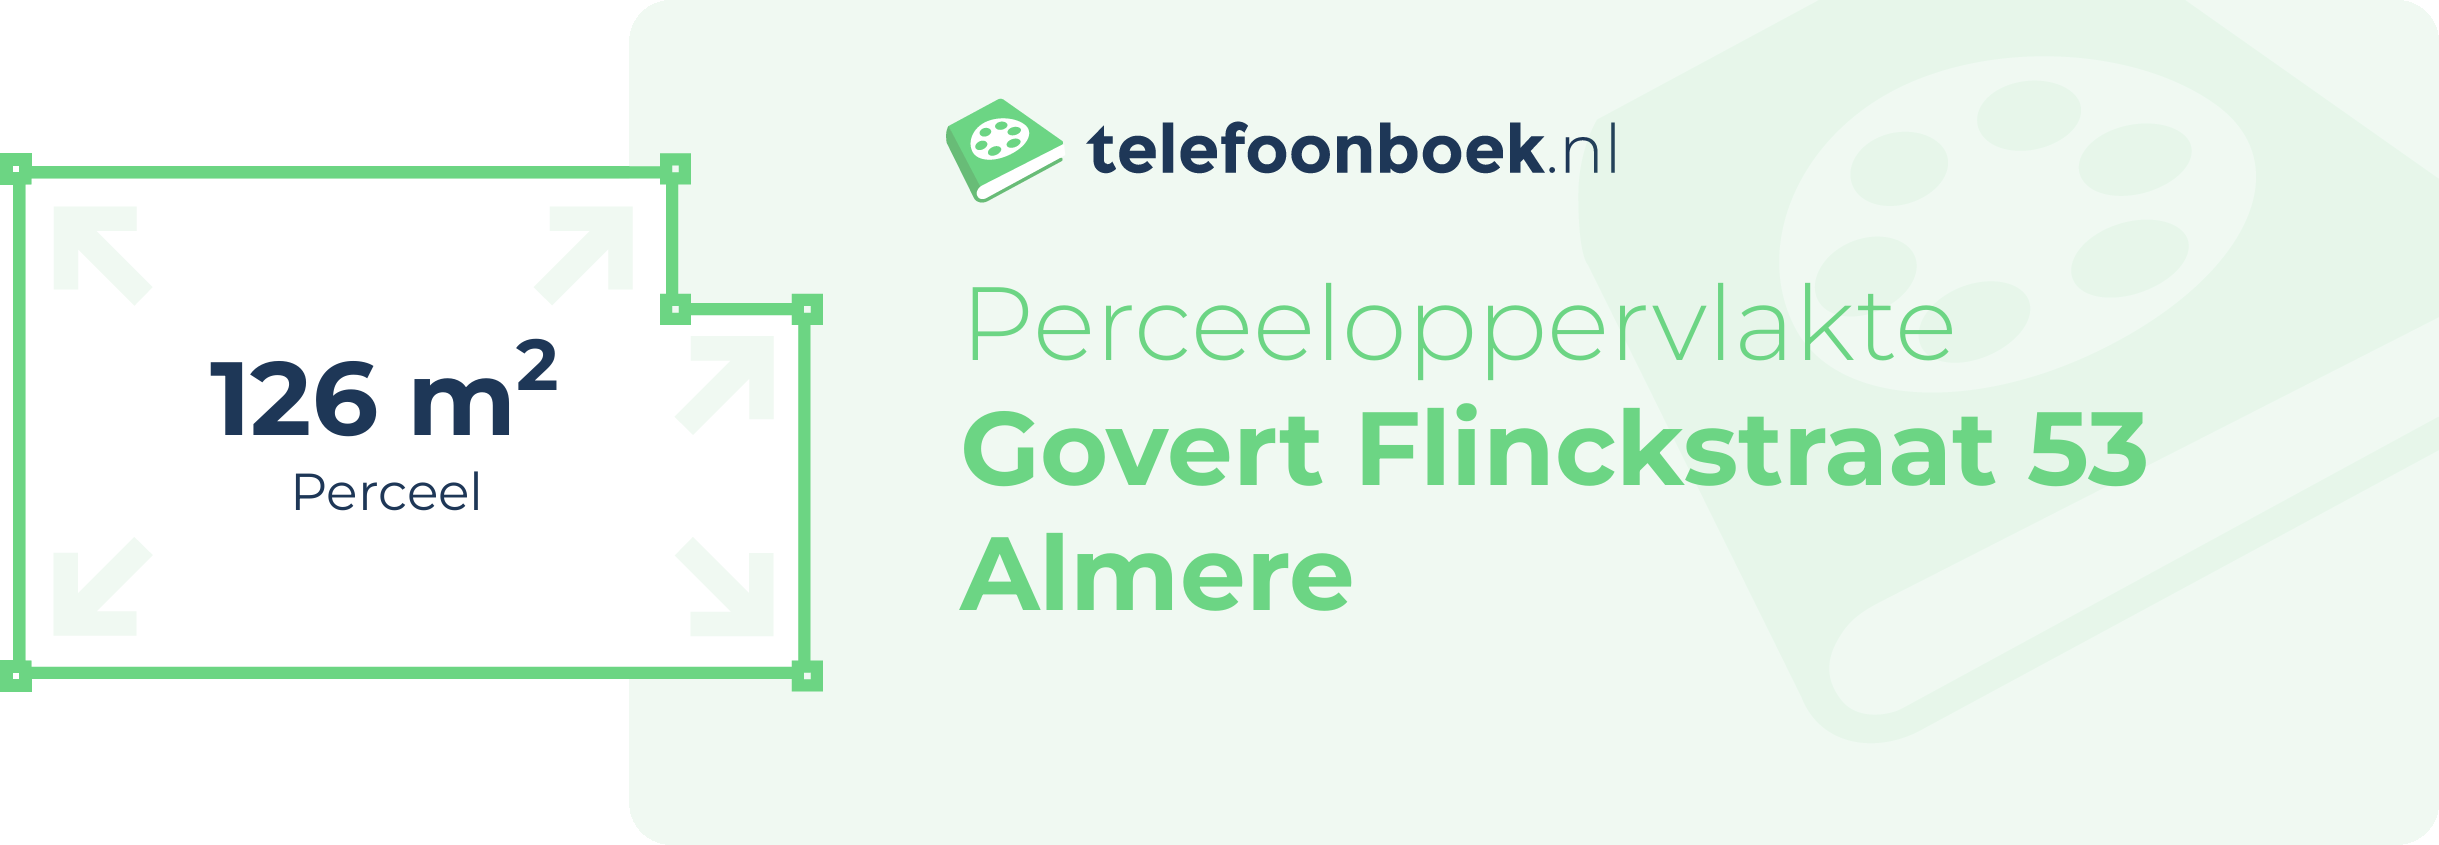 Perceeloppervlakte Govert Flinckstraat 53 Almere